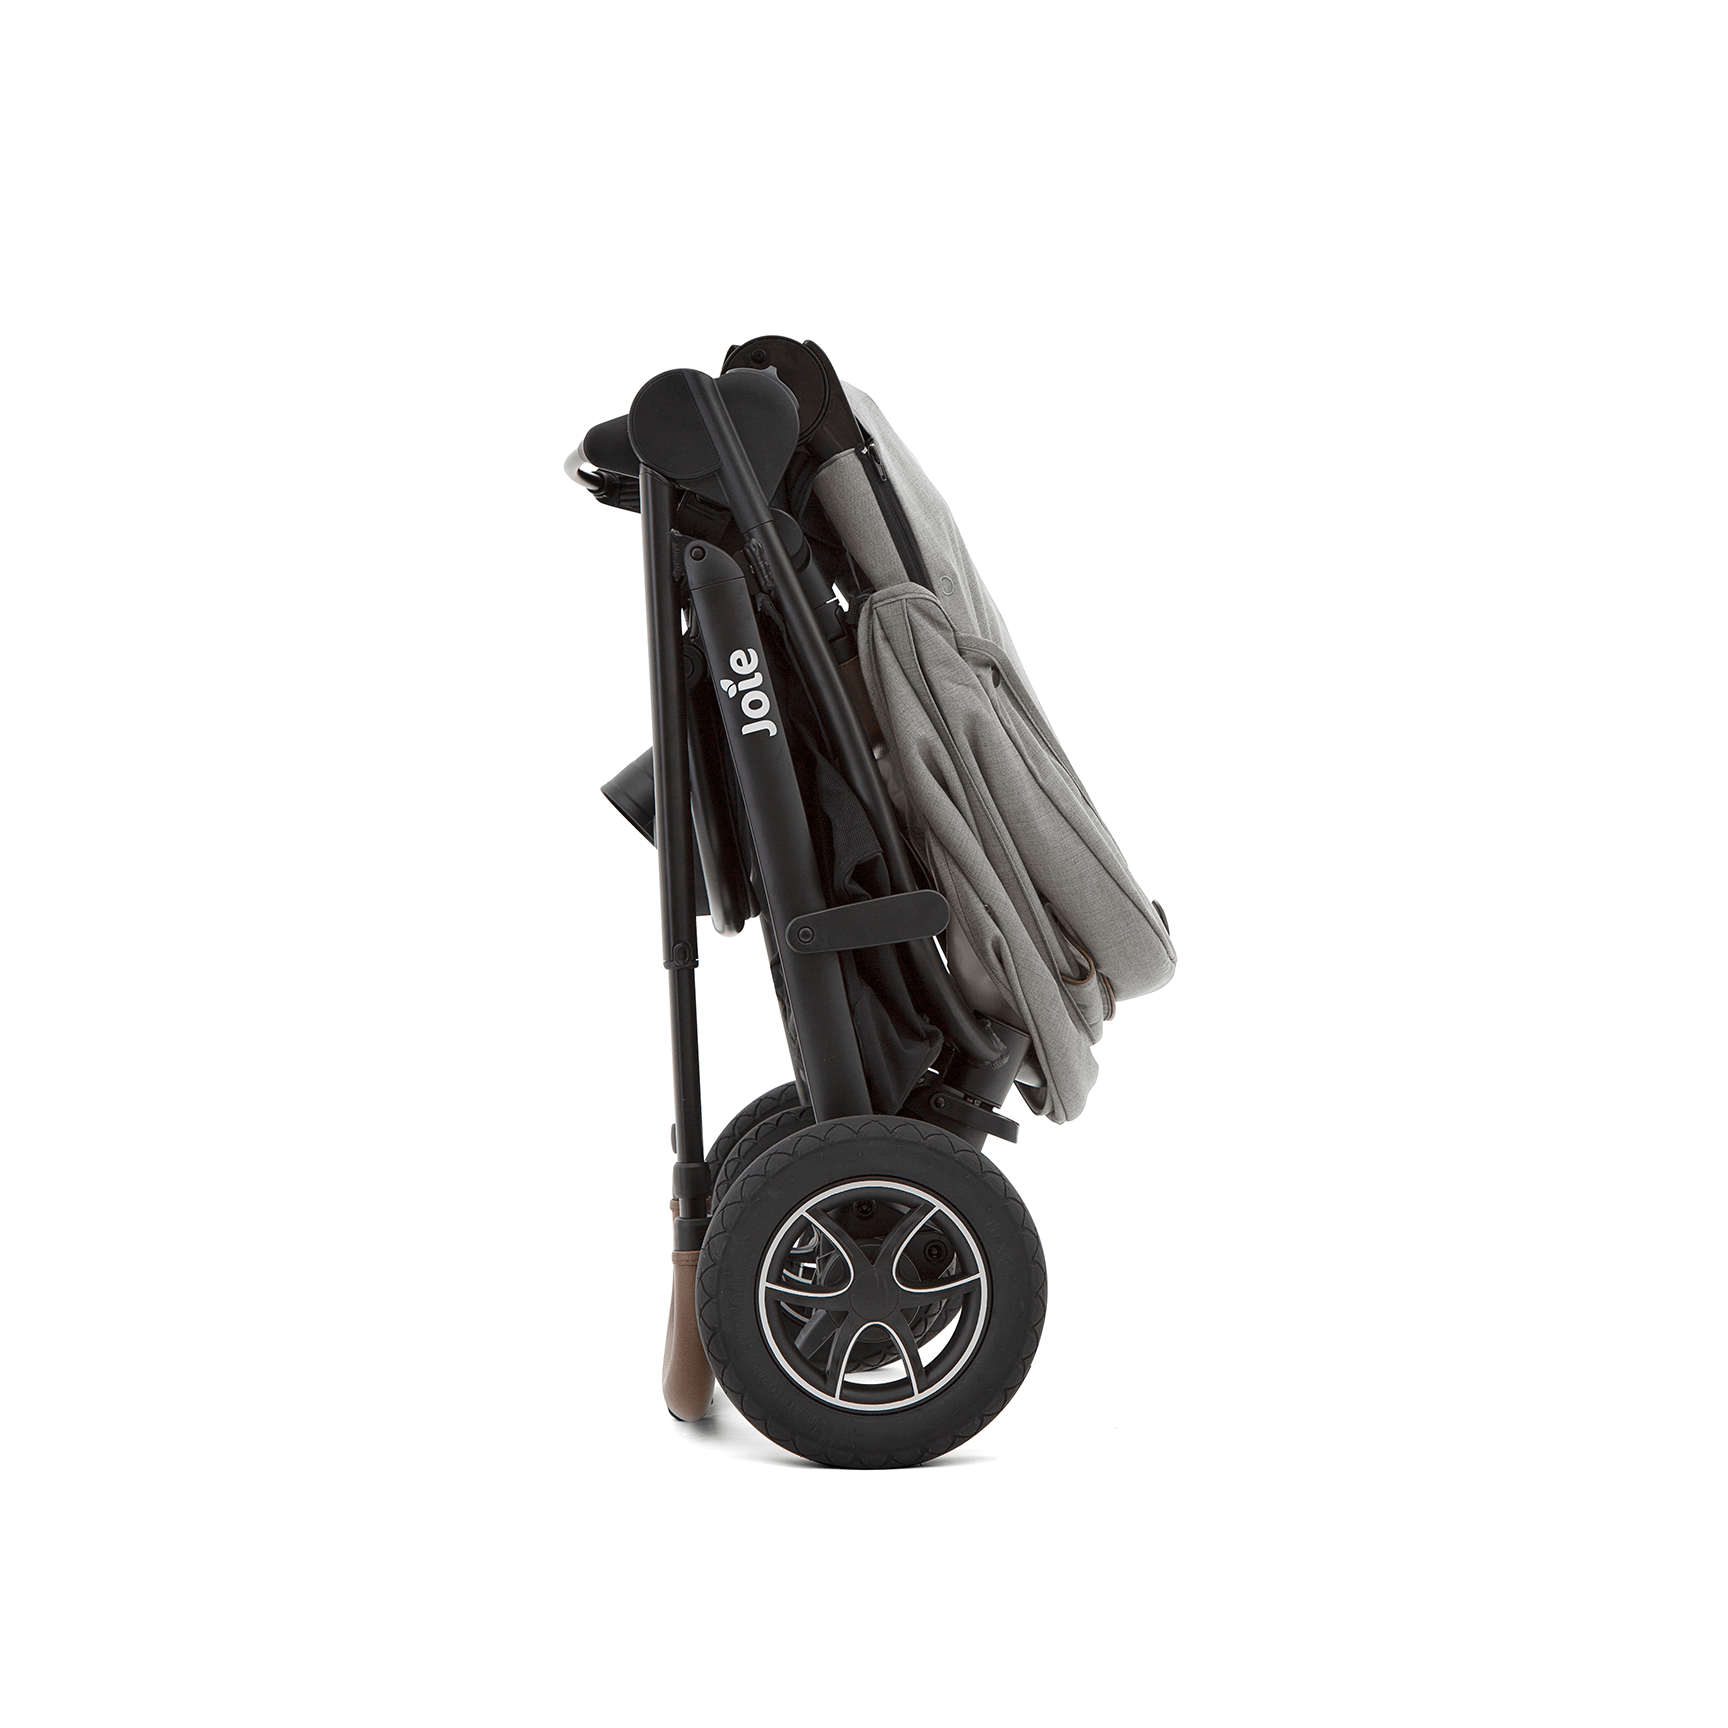 Joie Pushchairs & Buggies Joie Versatrax Stroller - Pebble S1803EAPEB000